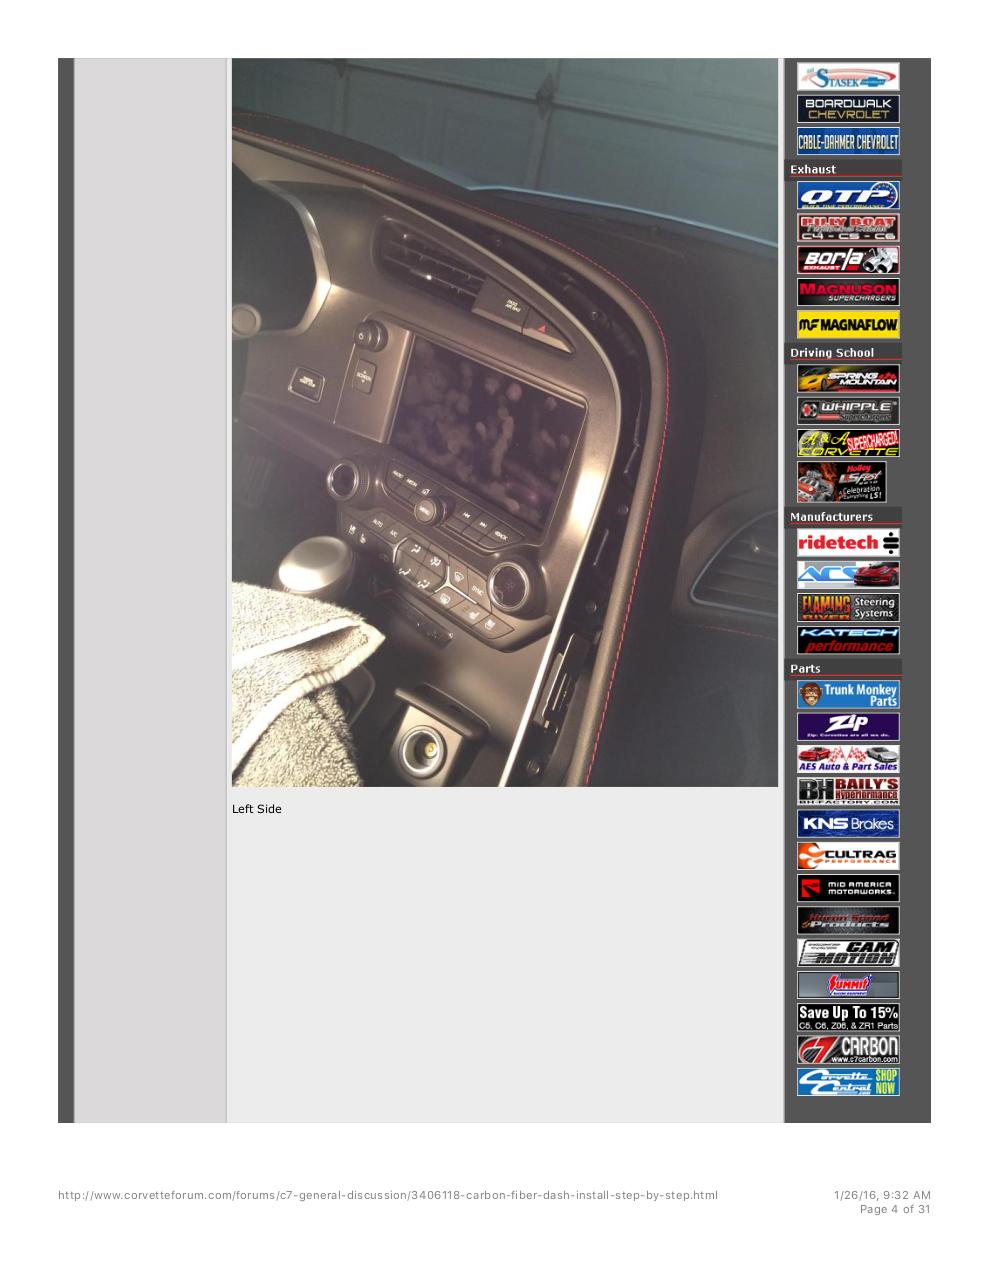 Carbon Fiber Dash Install - Step by Step - Corvette Forum.pdf - page 4/31